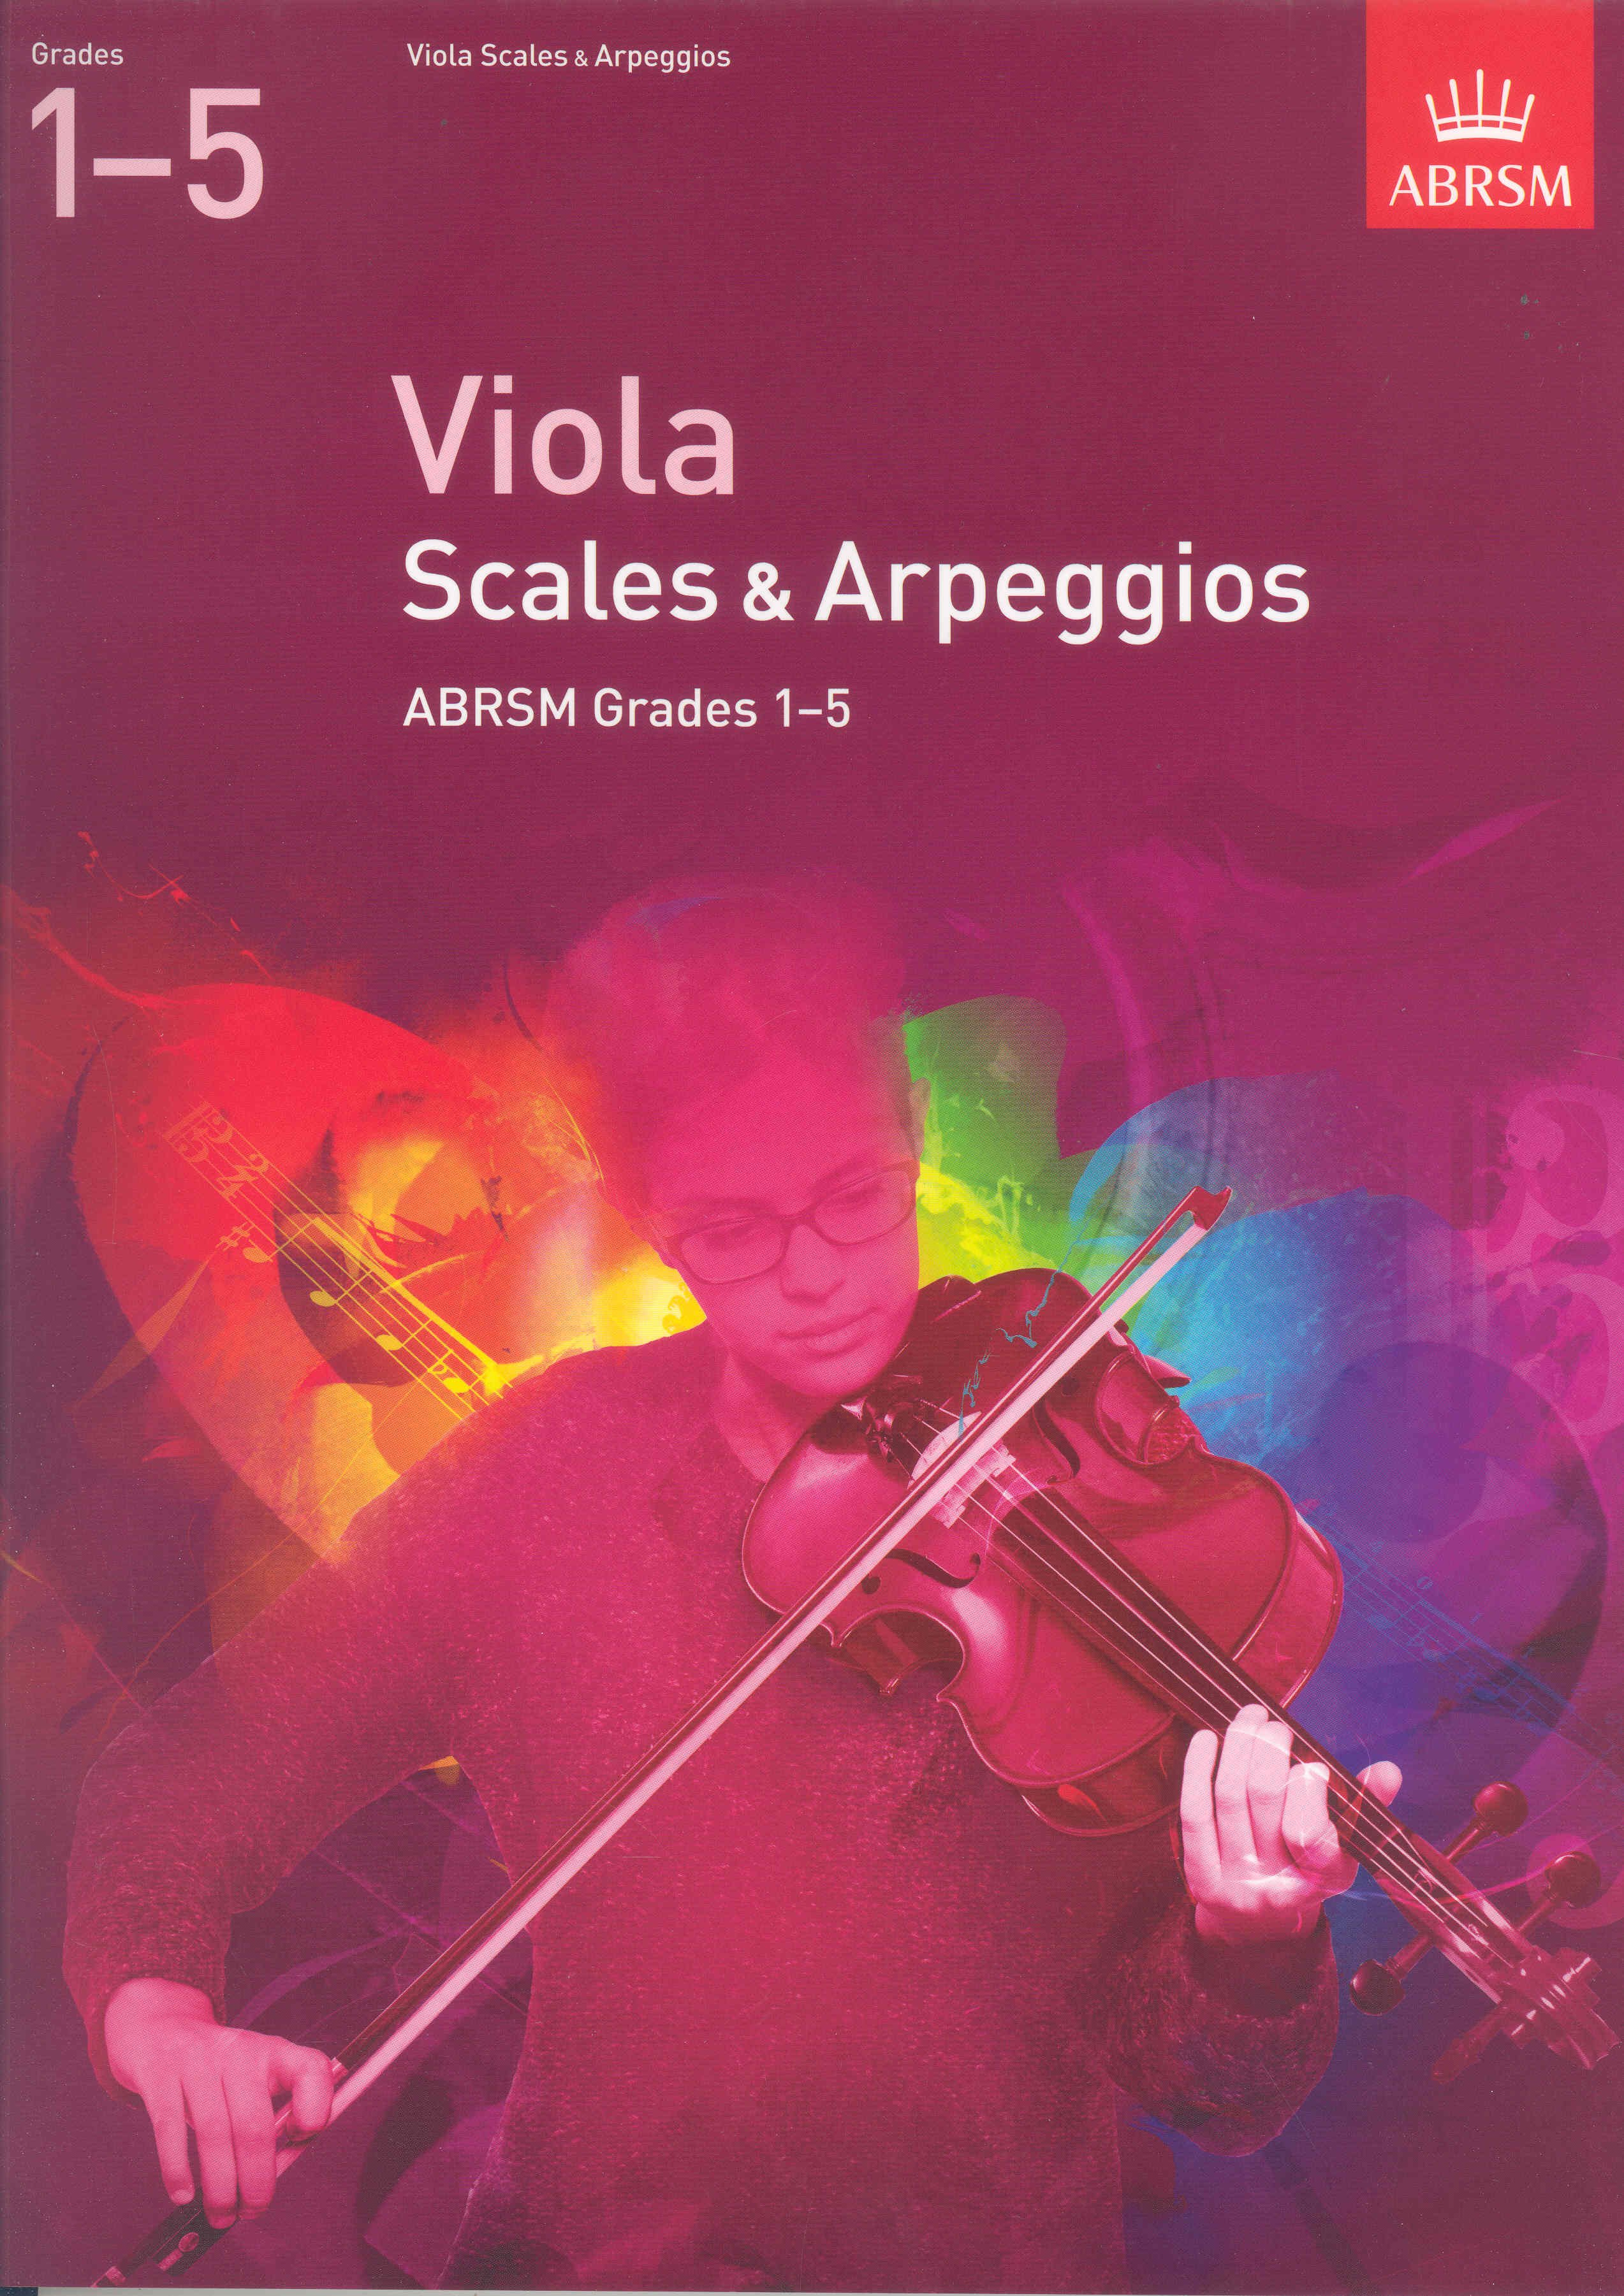 Viola Scales & Arpeggios 2012 Grades 1-5 Abrsm Sheet Music Songbook